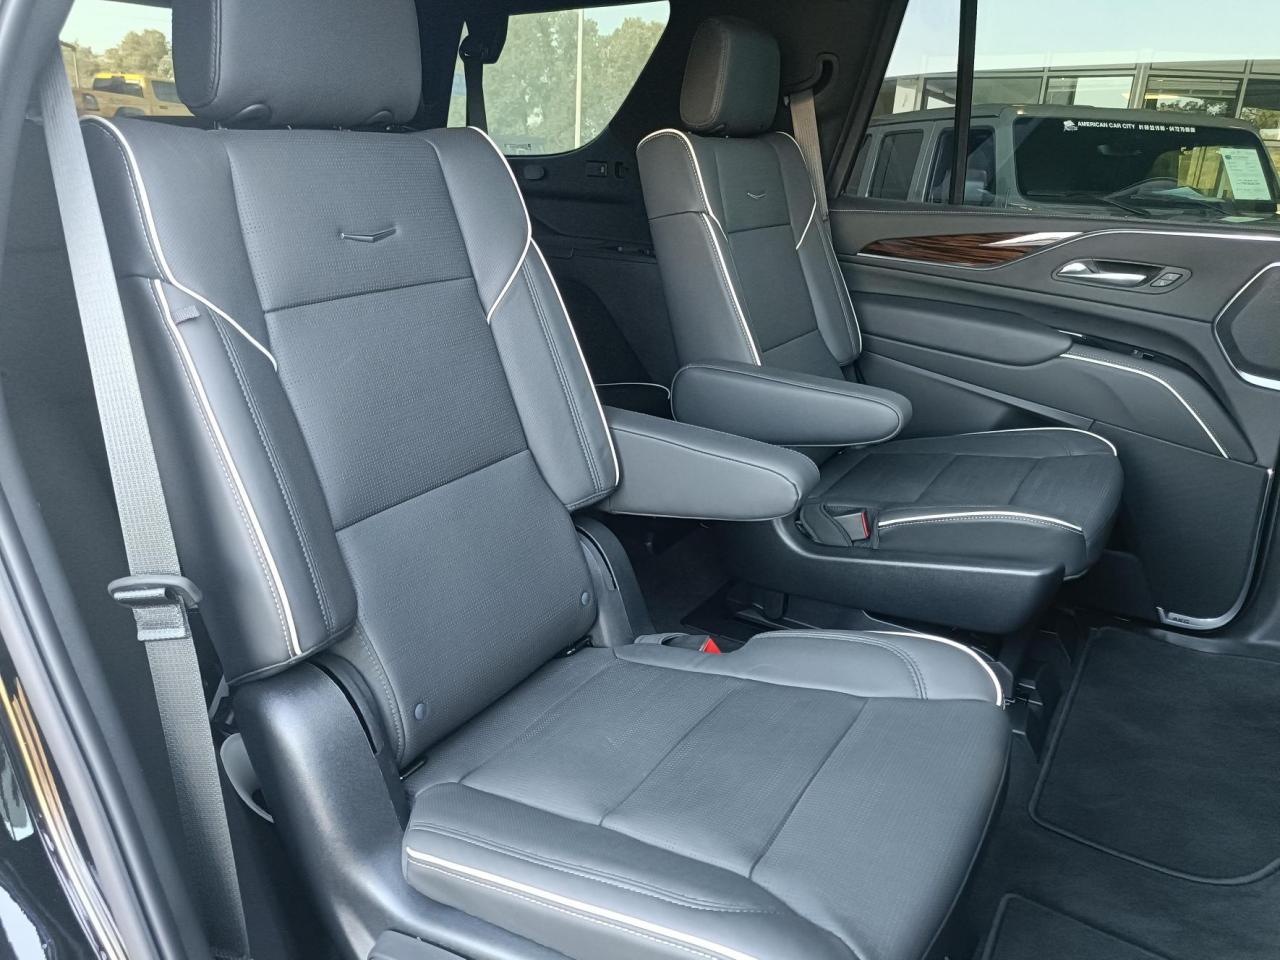 CADILLAC ESCALADE SUV Premium Luxury V8 6.2L